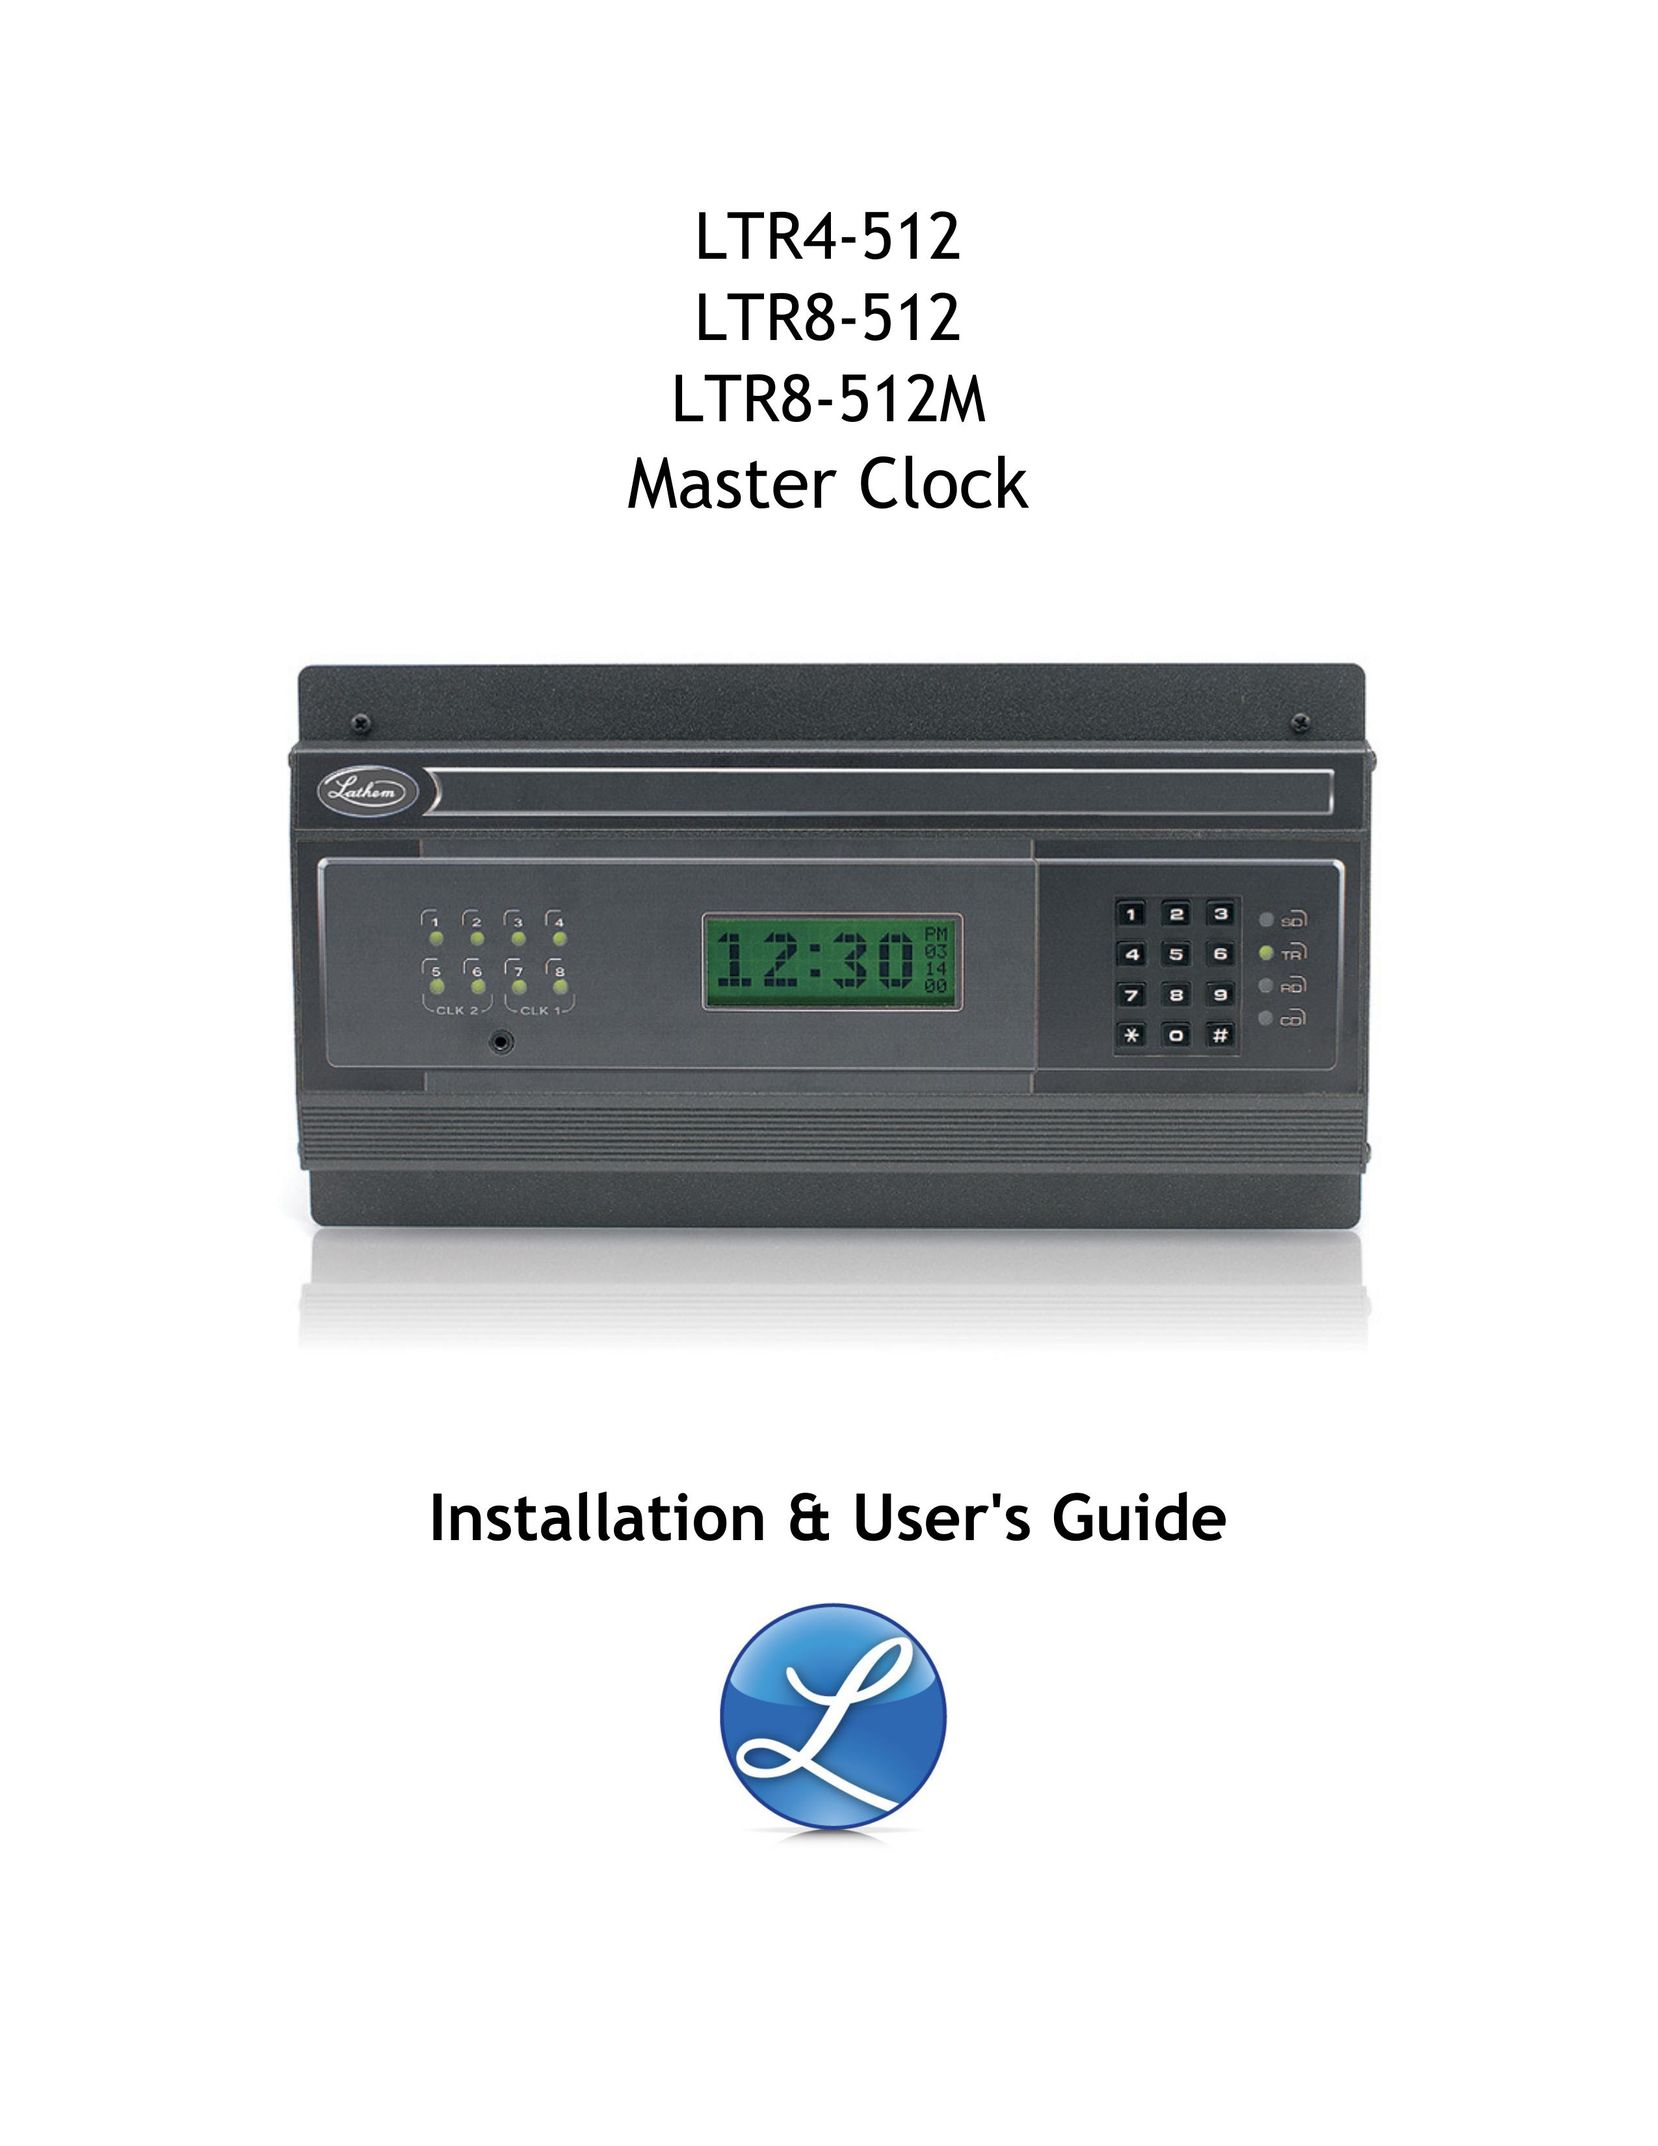 Master Lock LTR8-512M Clock User Manual